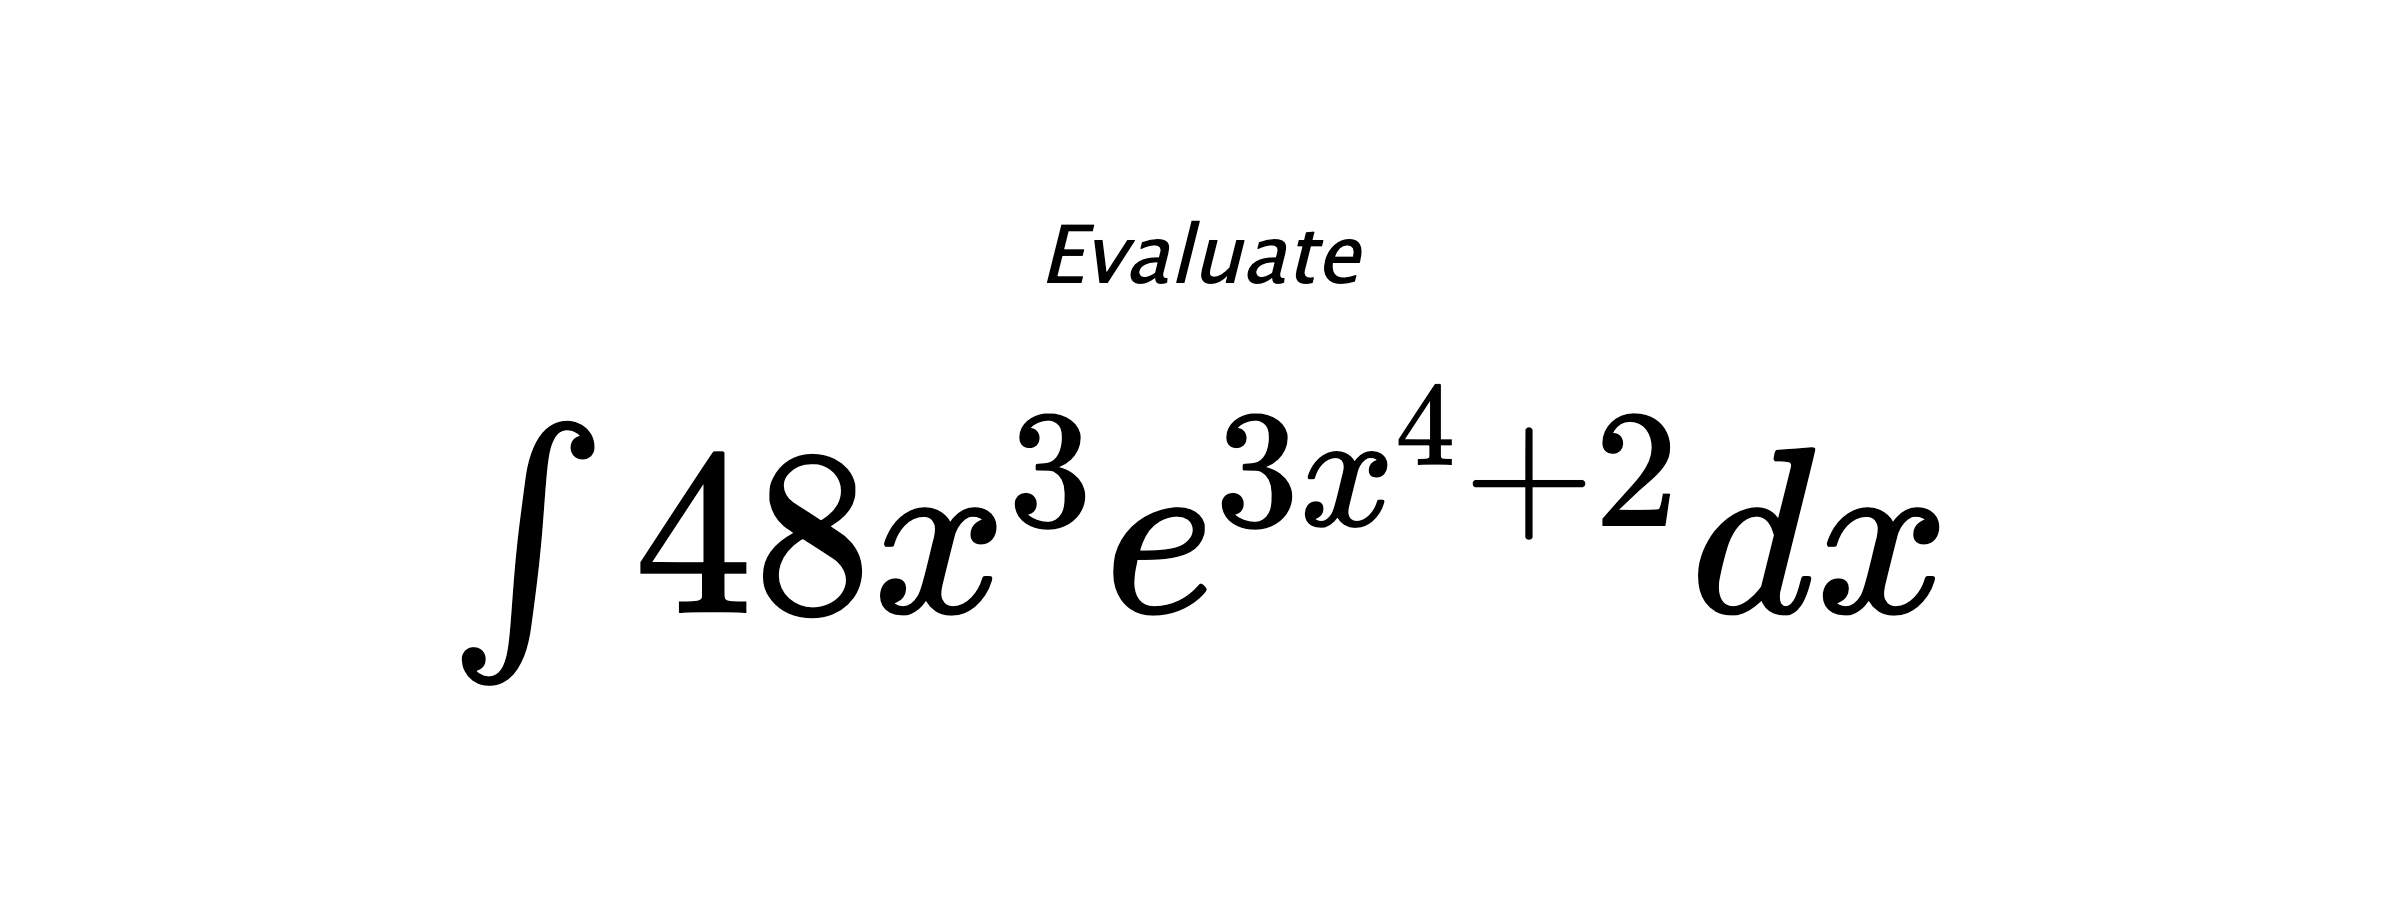 Evaluate $ \int 48x^3e^{3x^4+2}dx $